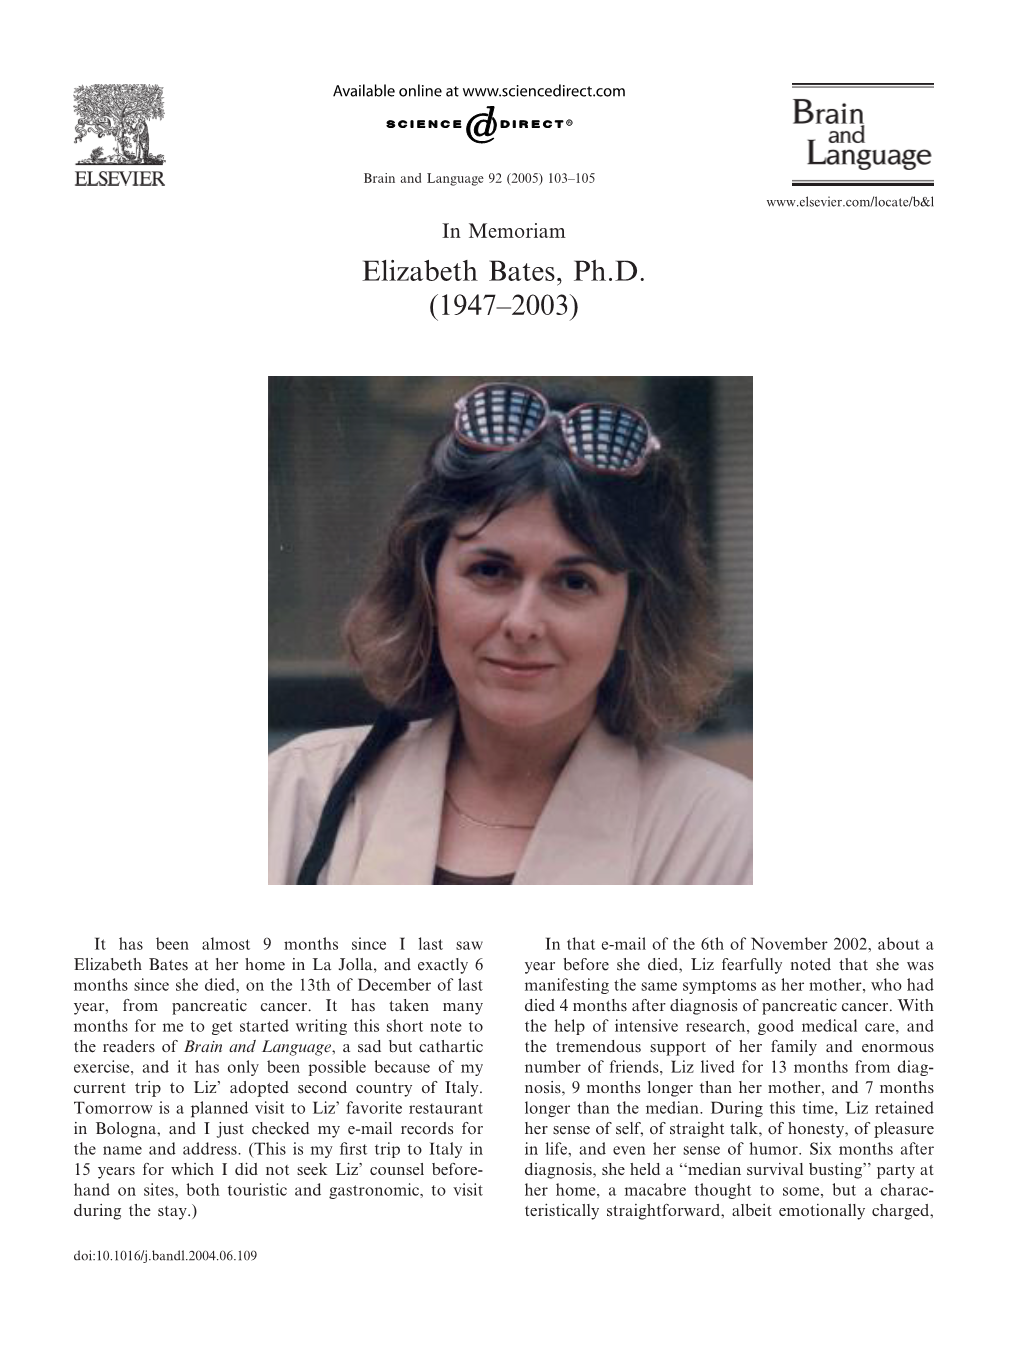 Elizabeth Bates, Ph.D. (1947–2003)